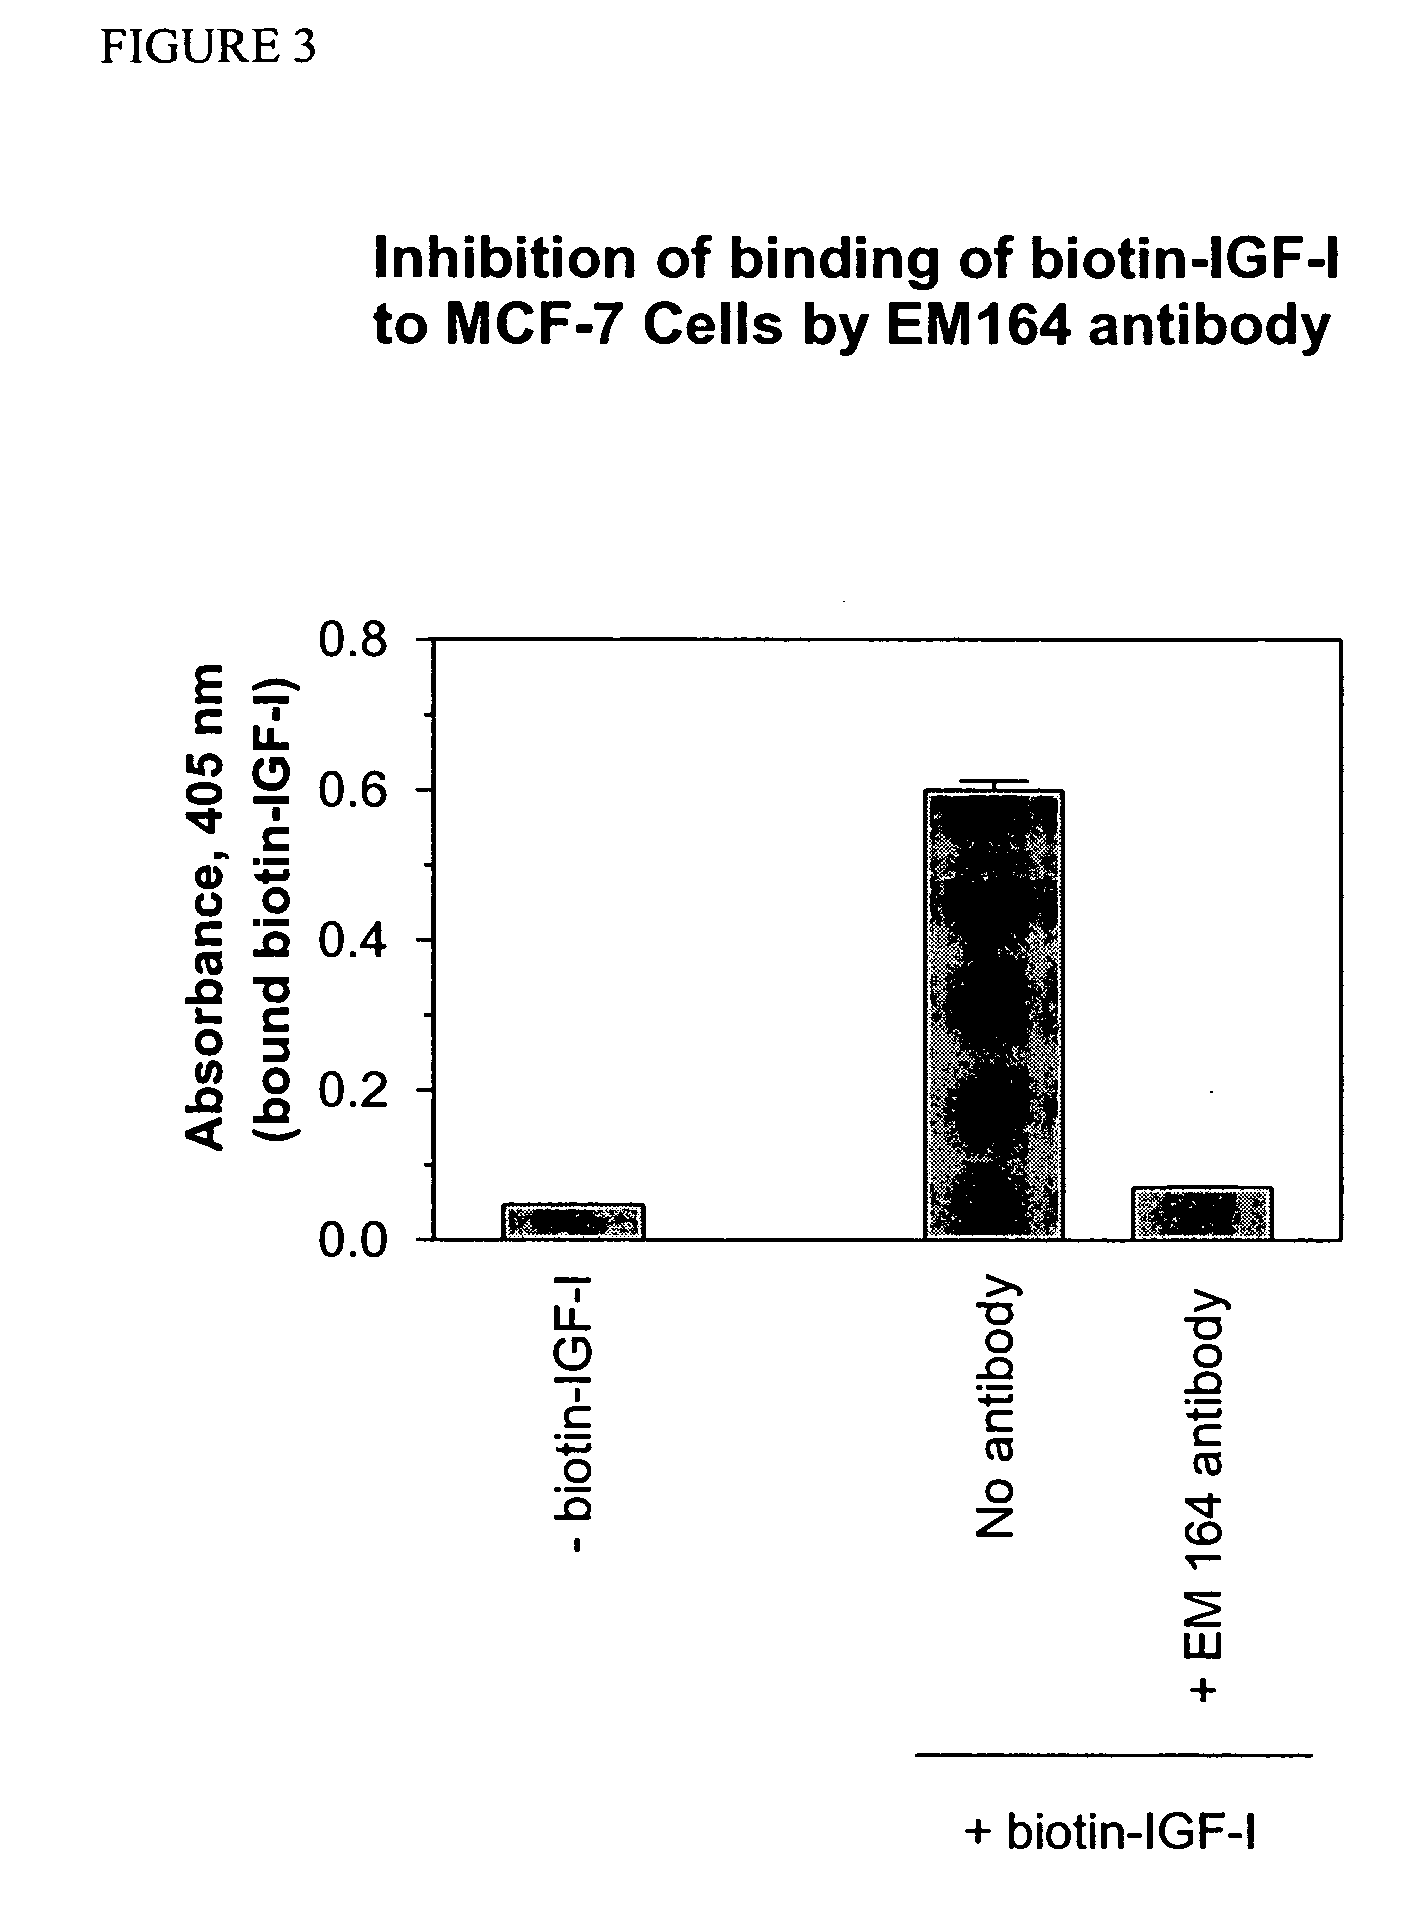 Anti-IGF-I receptor antibody